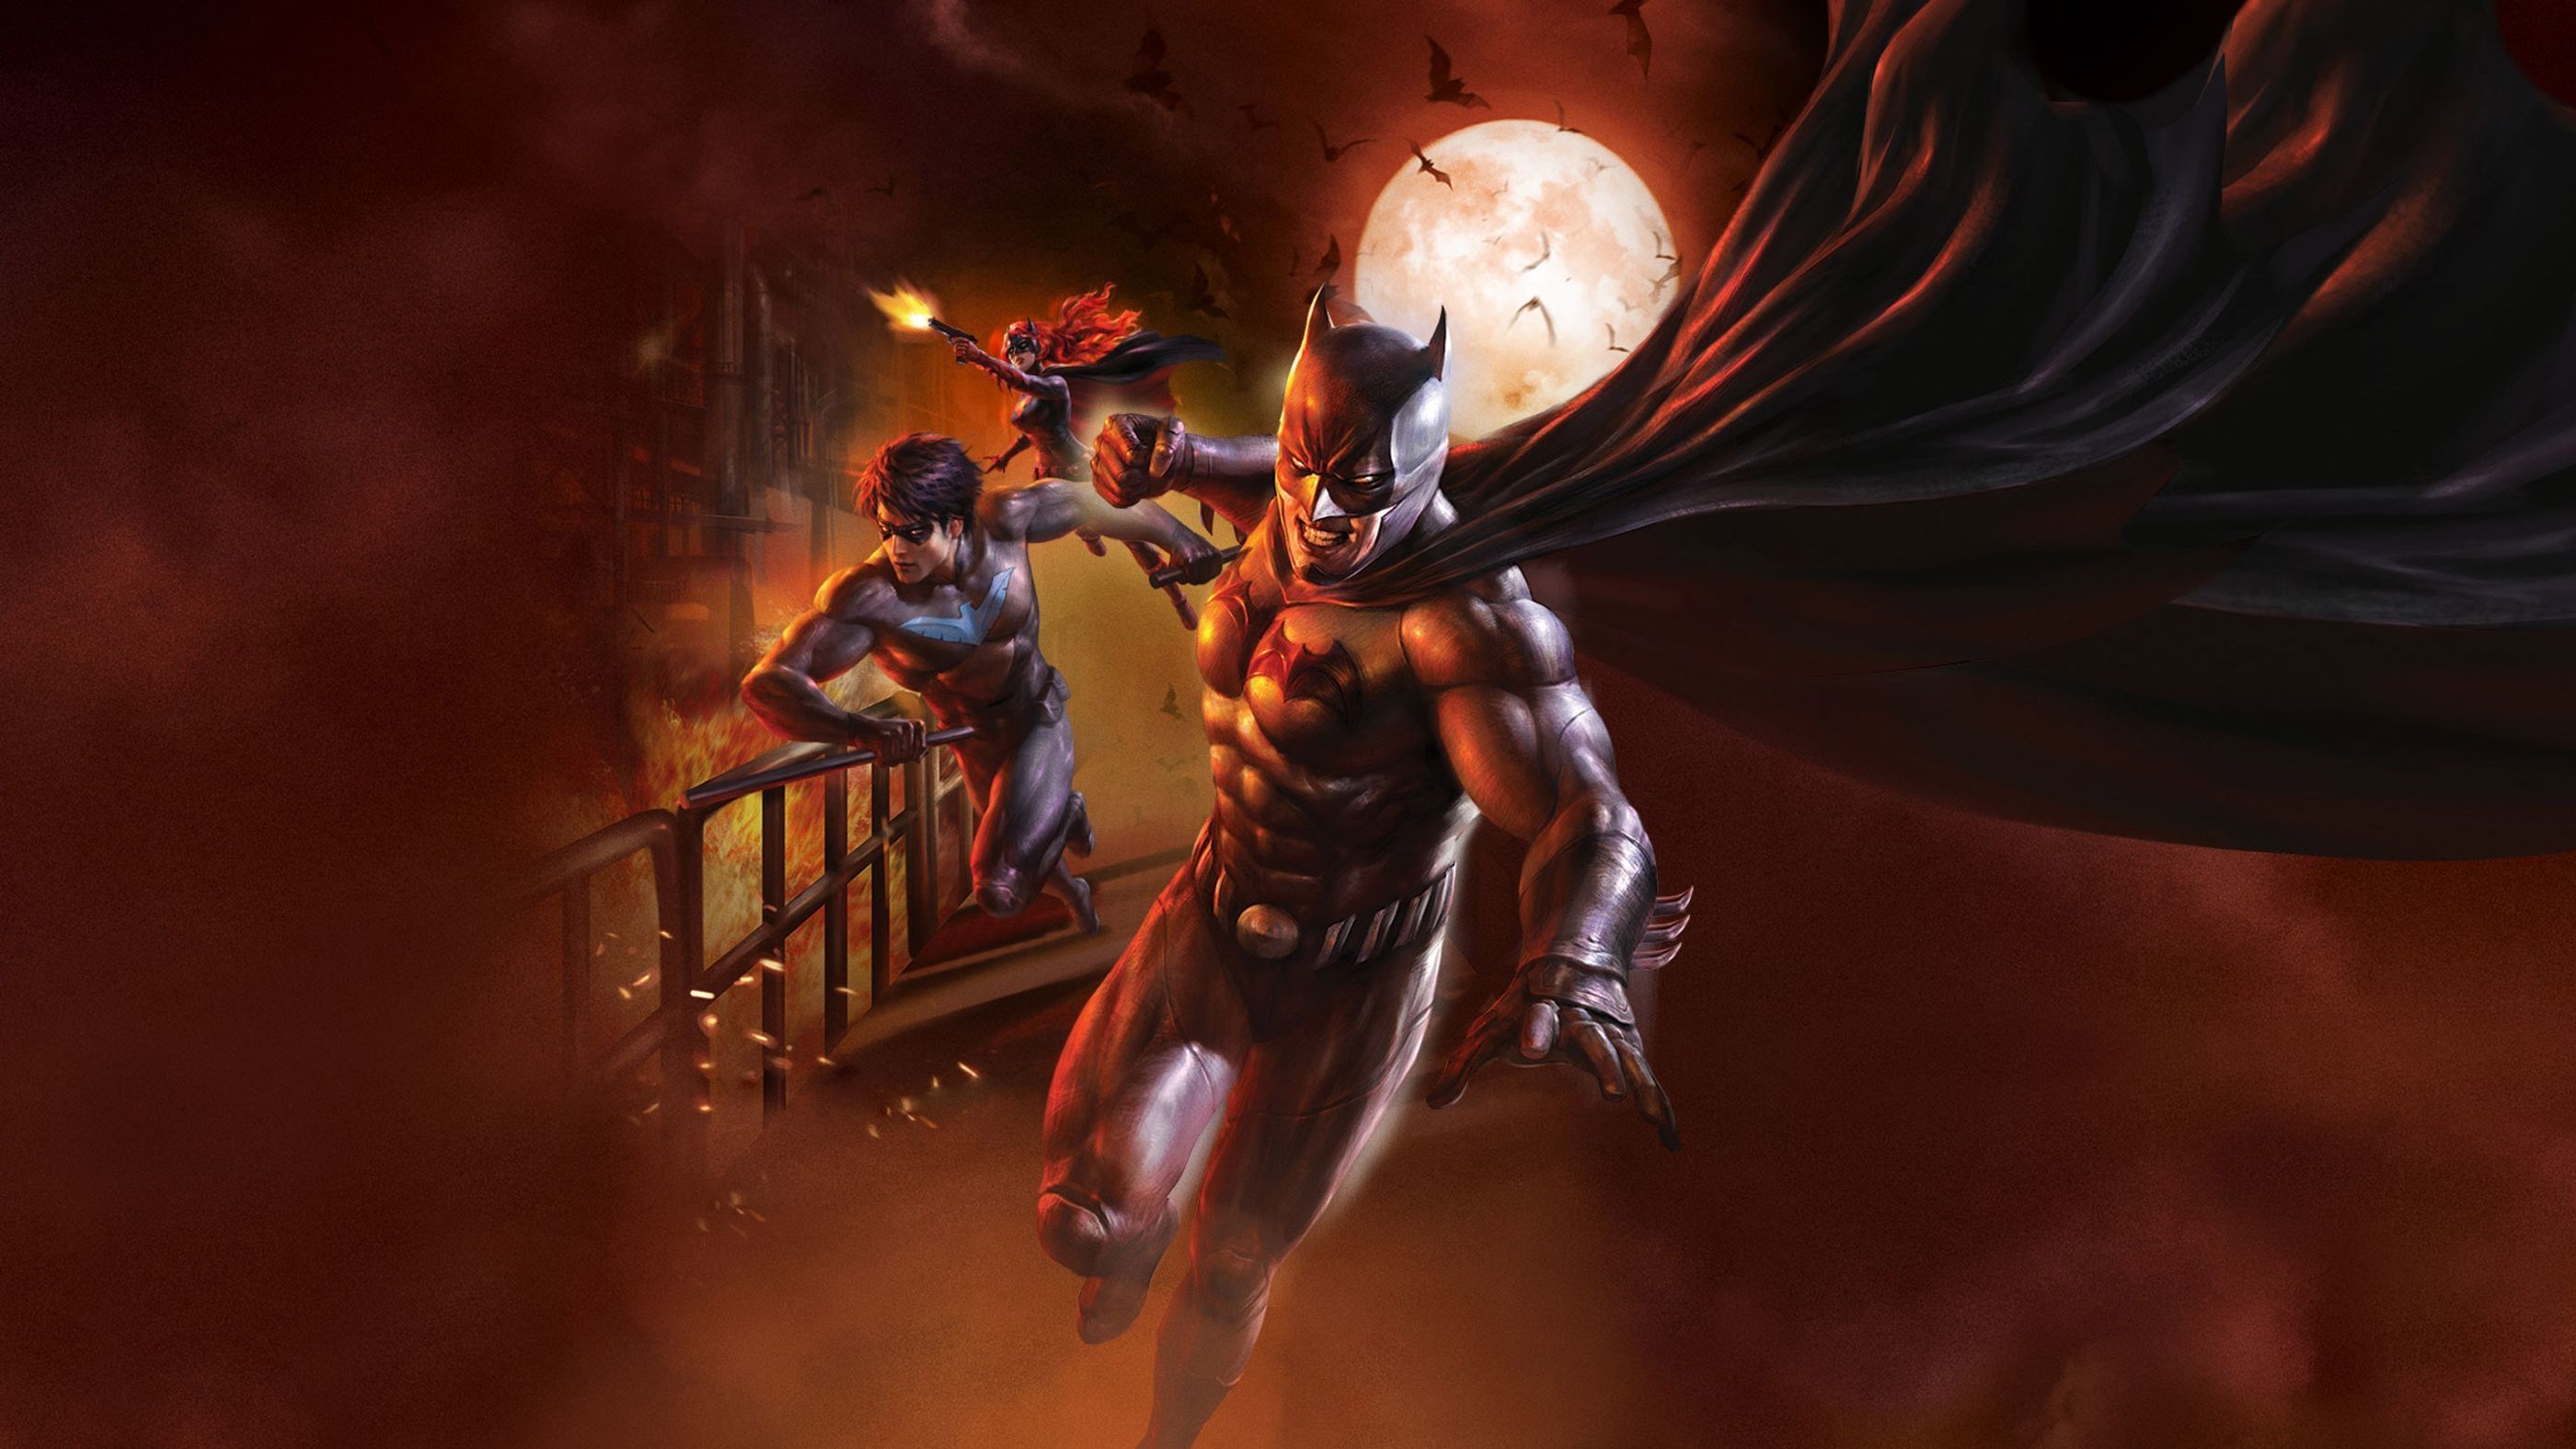 Batman Bad Blood Wallpaper, HD Superheroes 4K Wallpaper, Image, Photo and Background